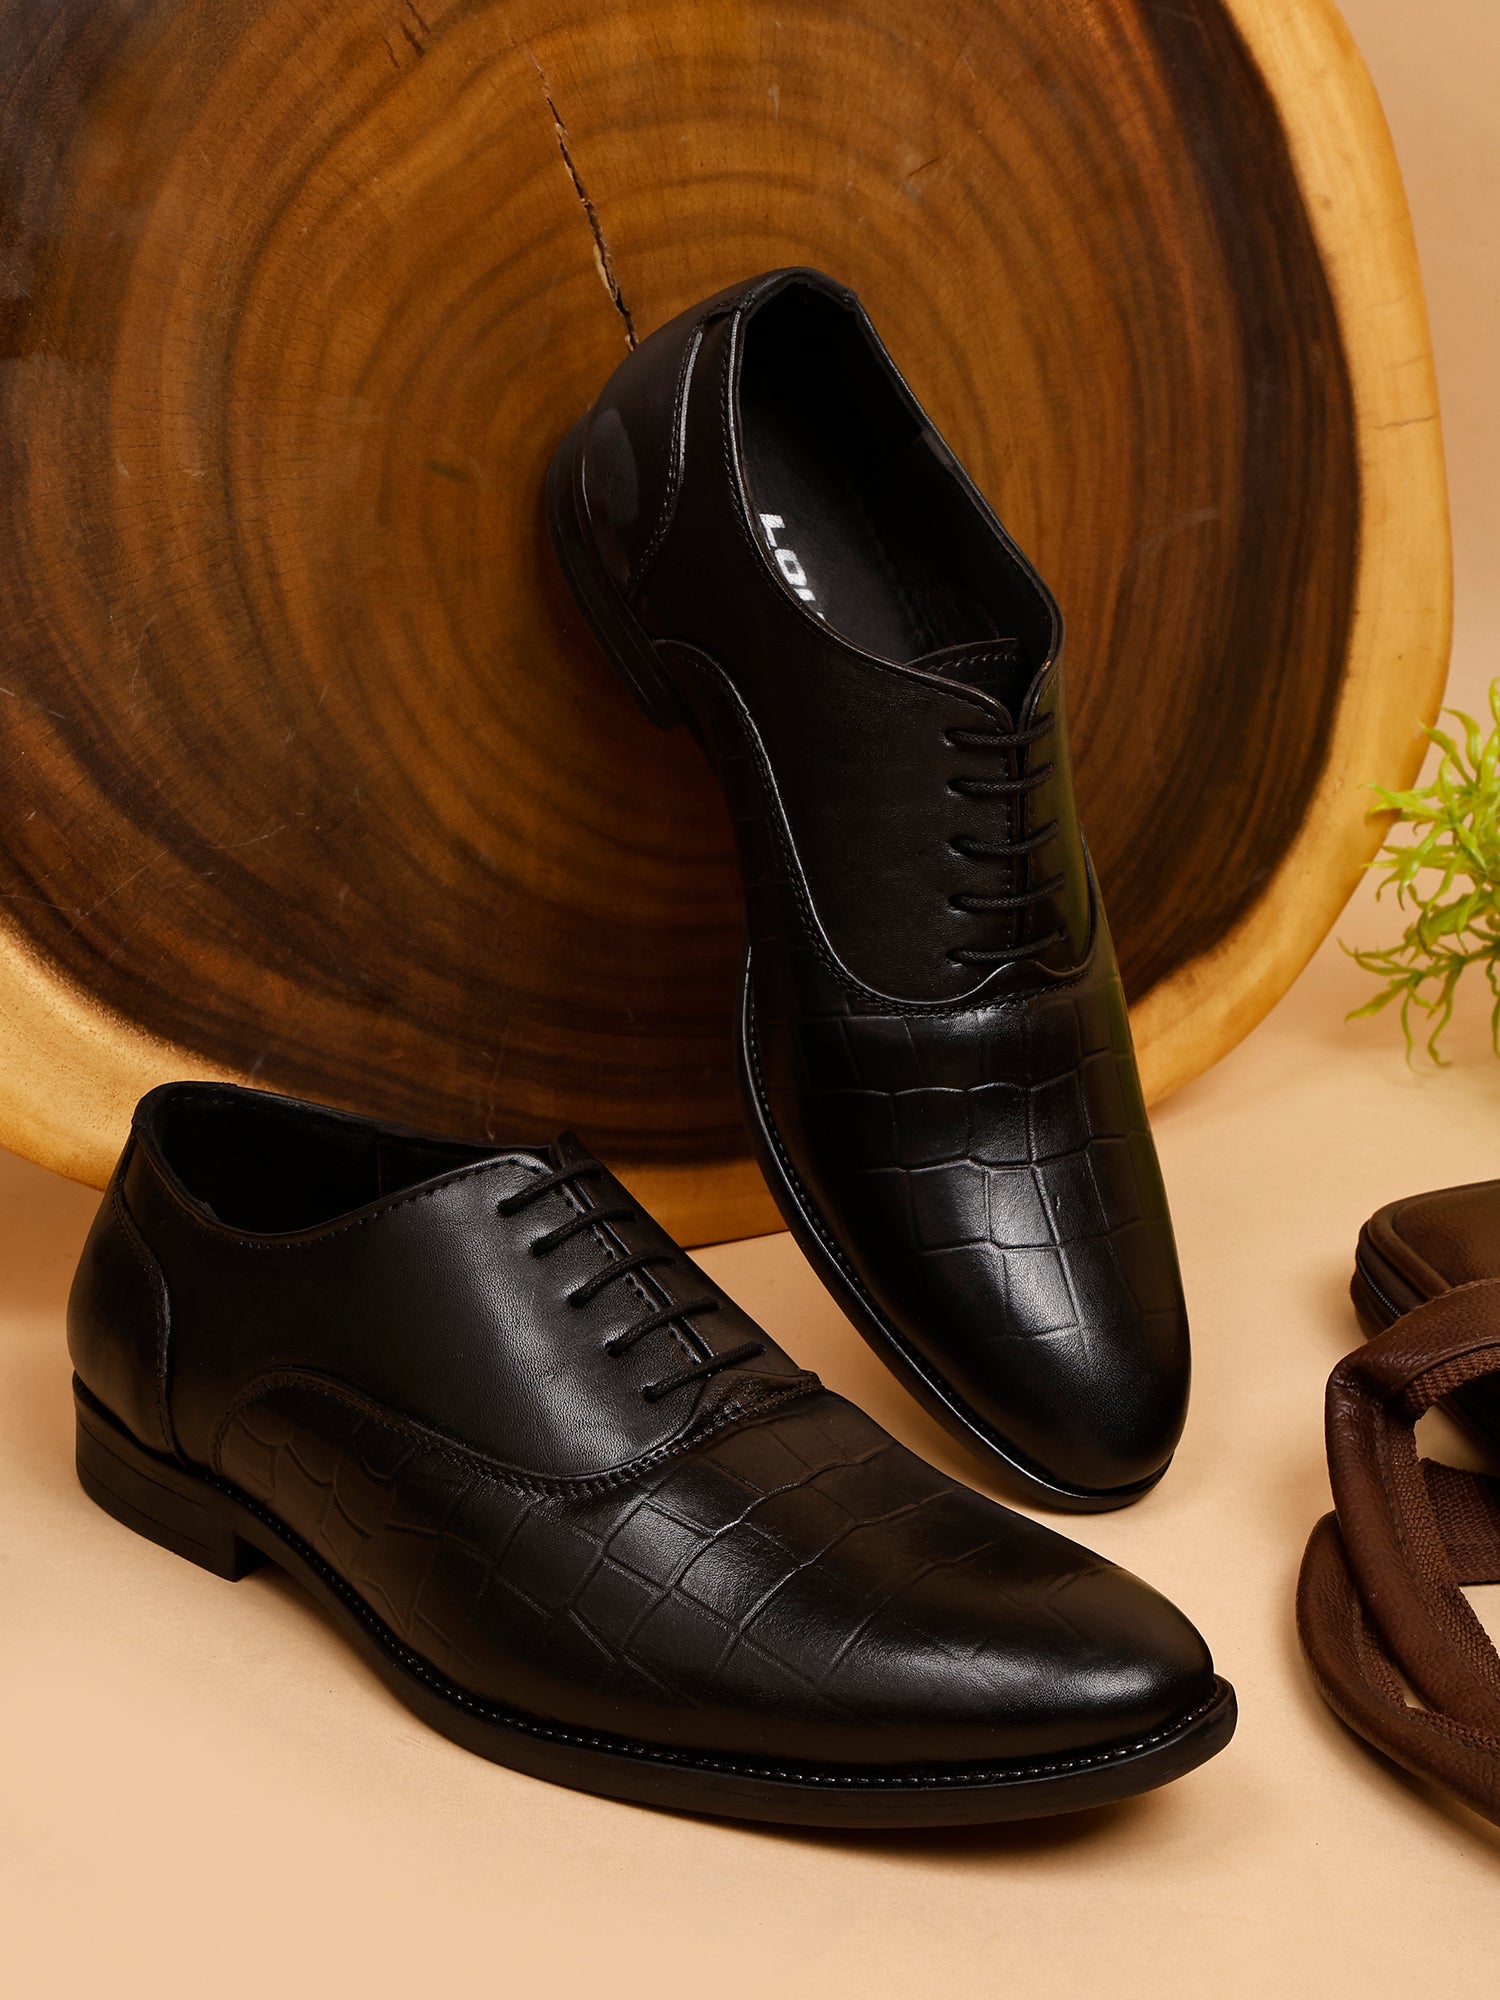 Louis Blanc Crust Leather Snake Design Formal Shoes For Men’s (LB 26)